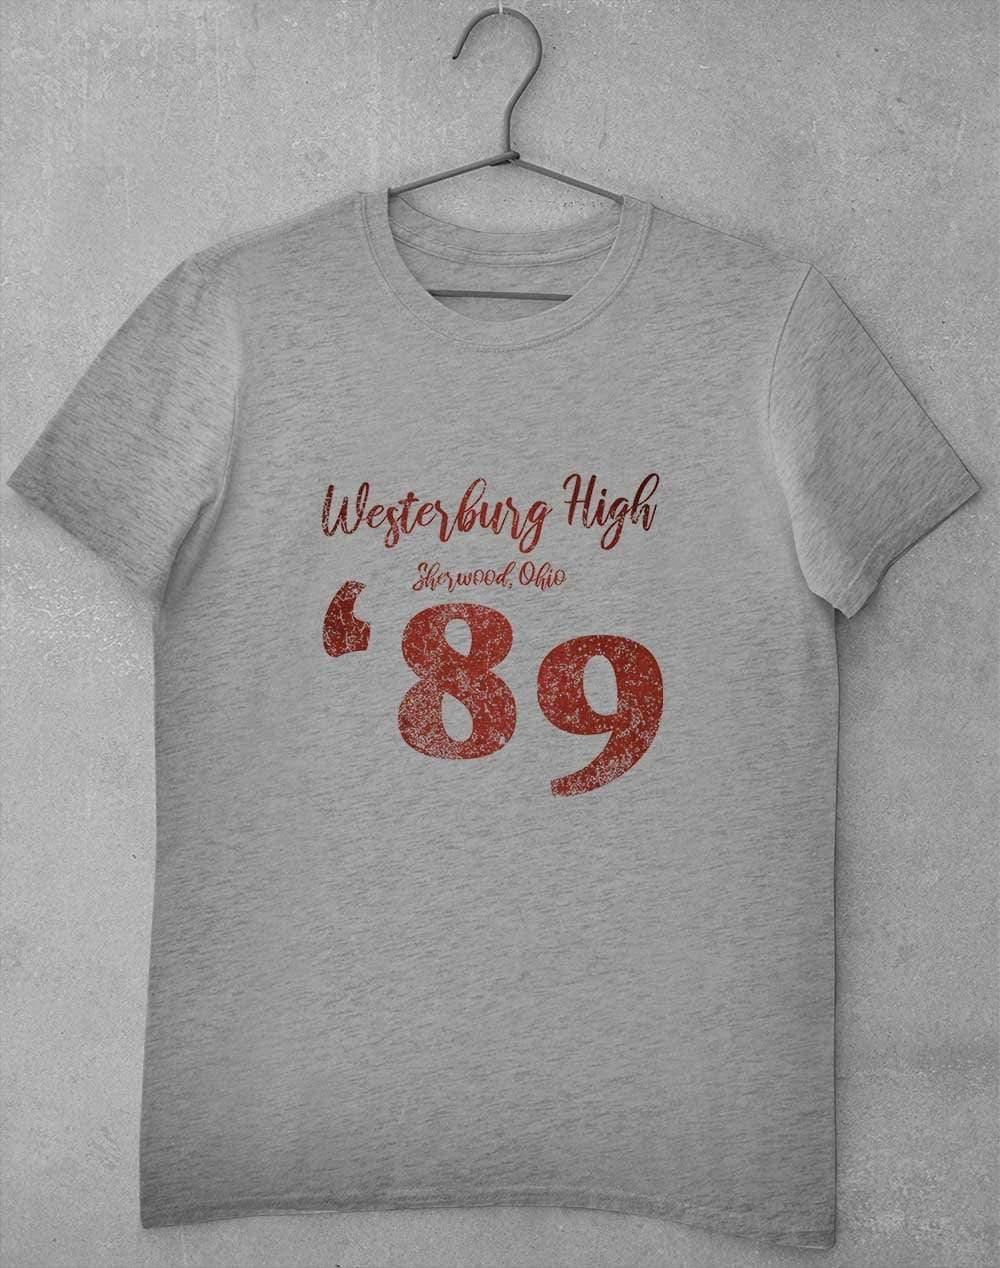 Westerburg High School 1989 Retro T-Shirt S / Sport Grey  - Off World Tees